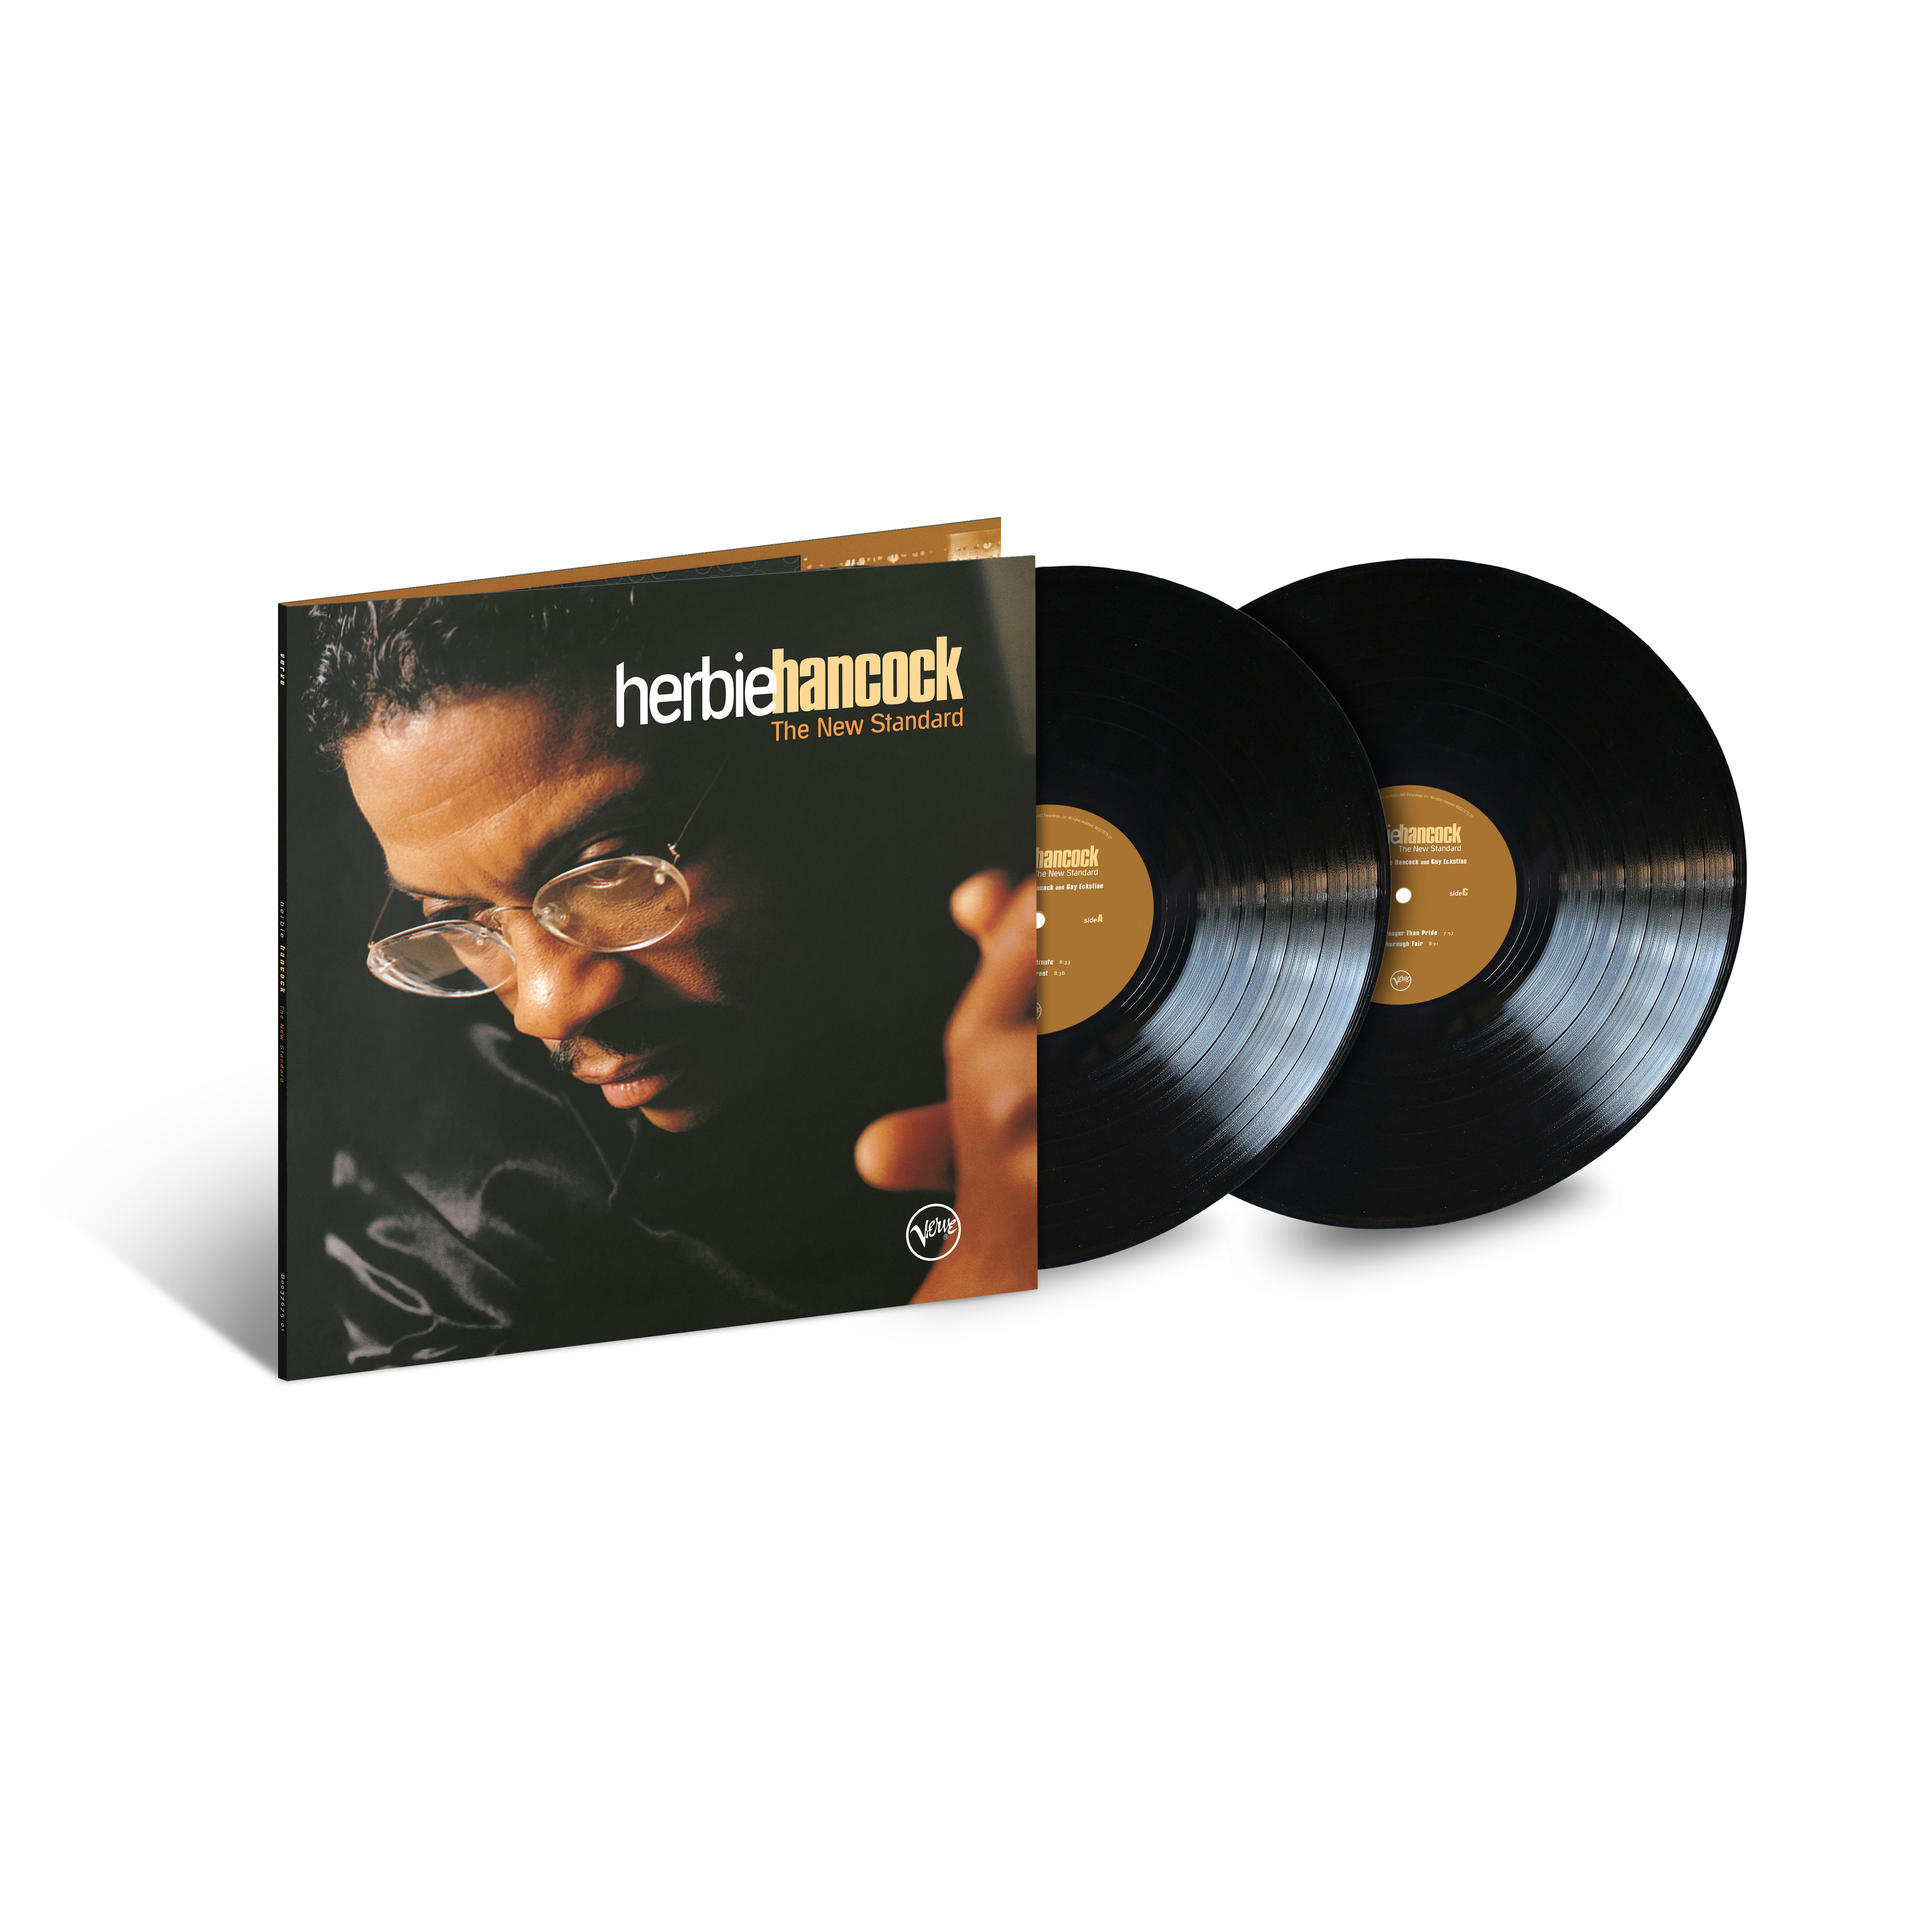 By Standard The - (Verve Herbie Request) (Vinyl) - New Hancock